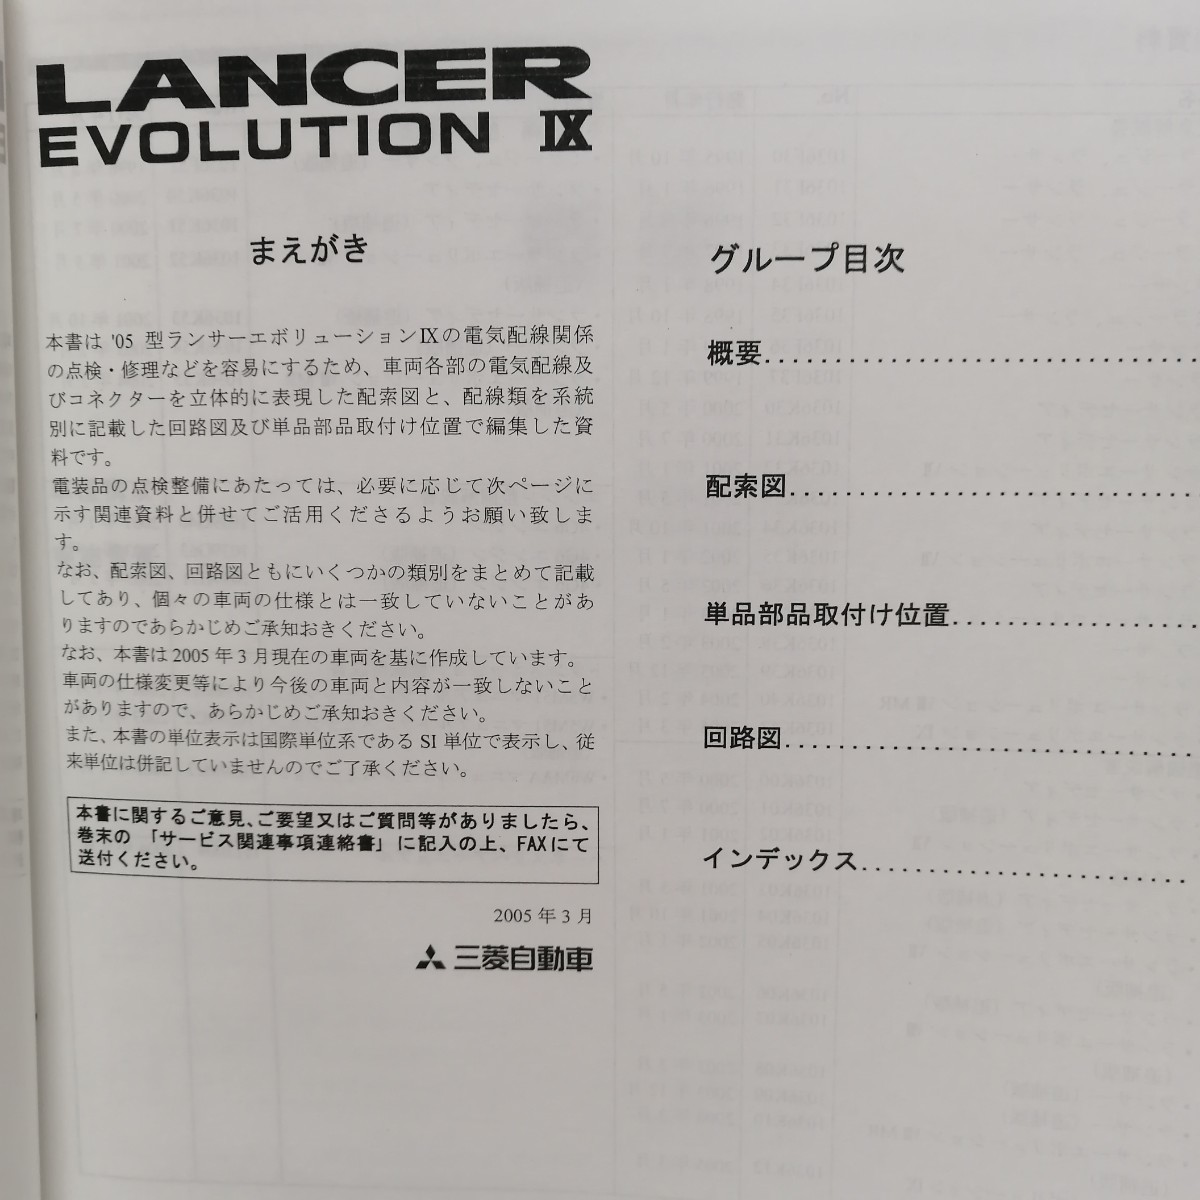  Mitsubishi Lancer Evolution 9 maintenance manual electric wiring diagram compilation supplement version 2005-3*CT9A Lancer Evolution LANCER Evolution Ⅸ 1036K82